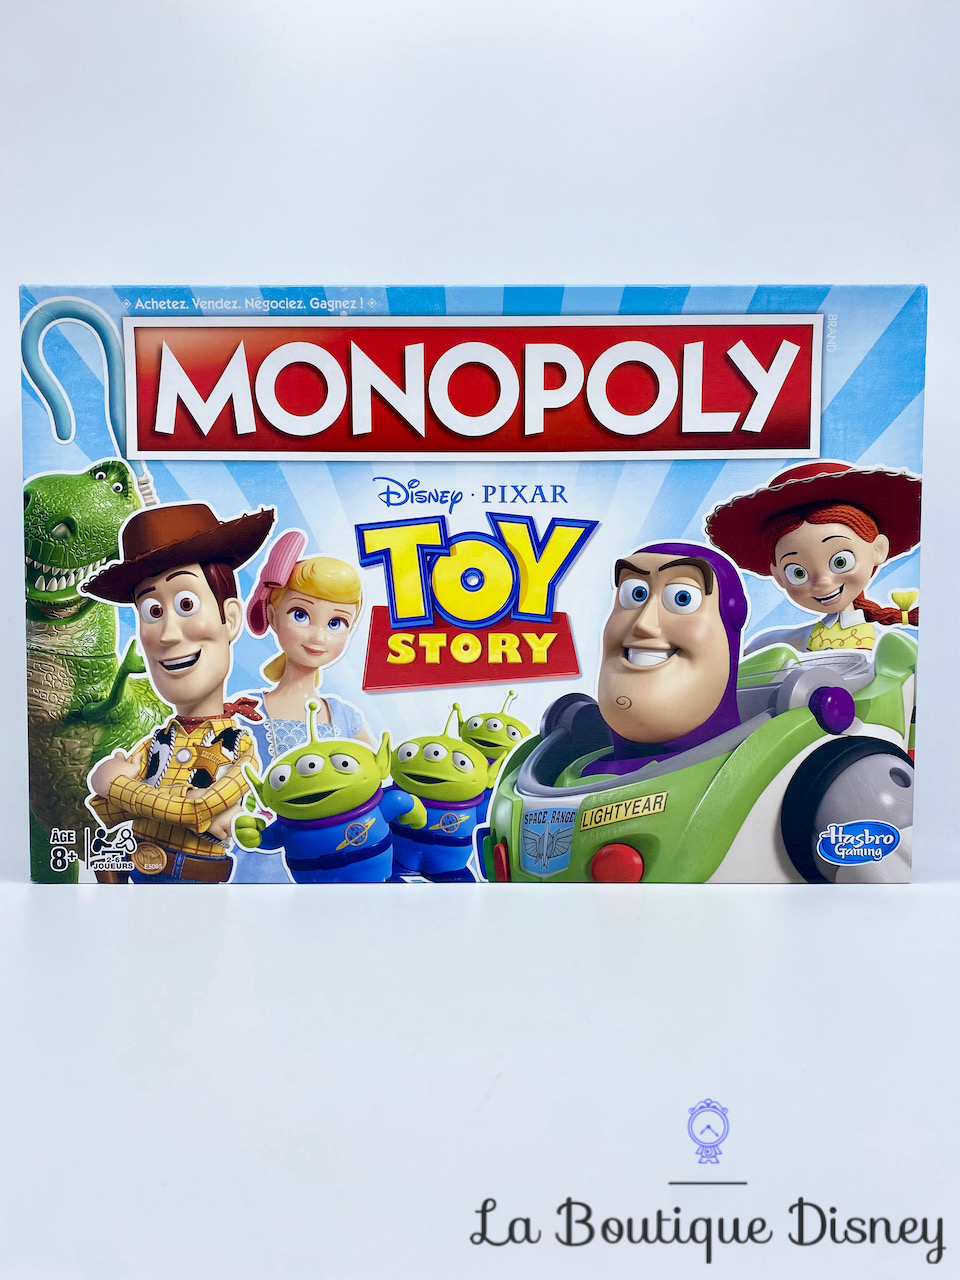 Jeu de société Monopoly Toy Story Disney Pixar Hasbro Gaming 2018